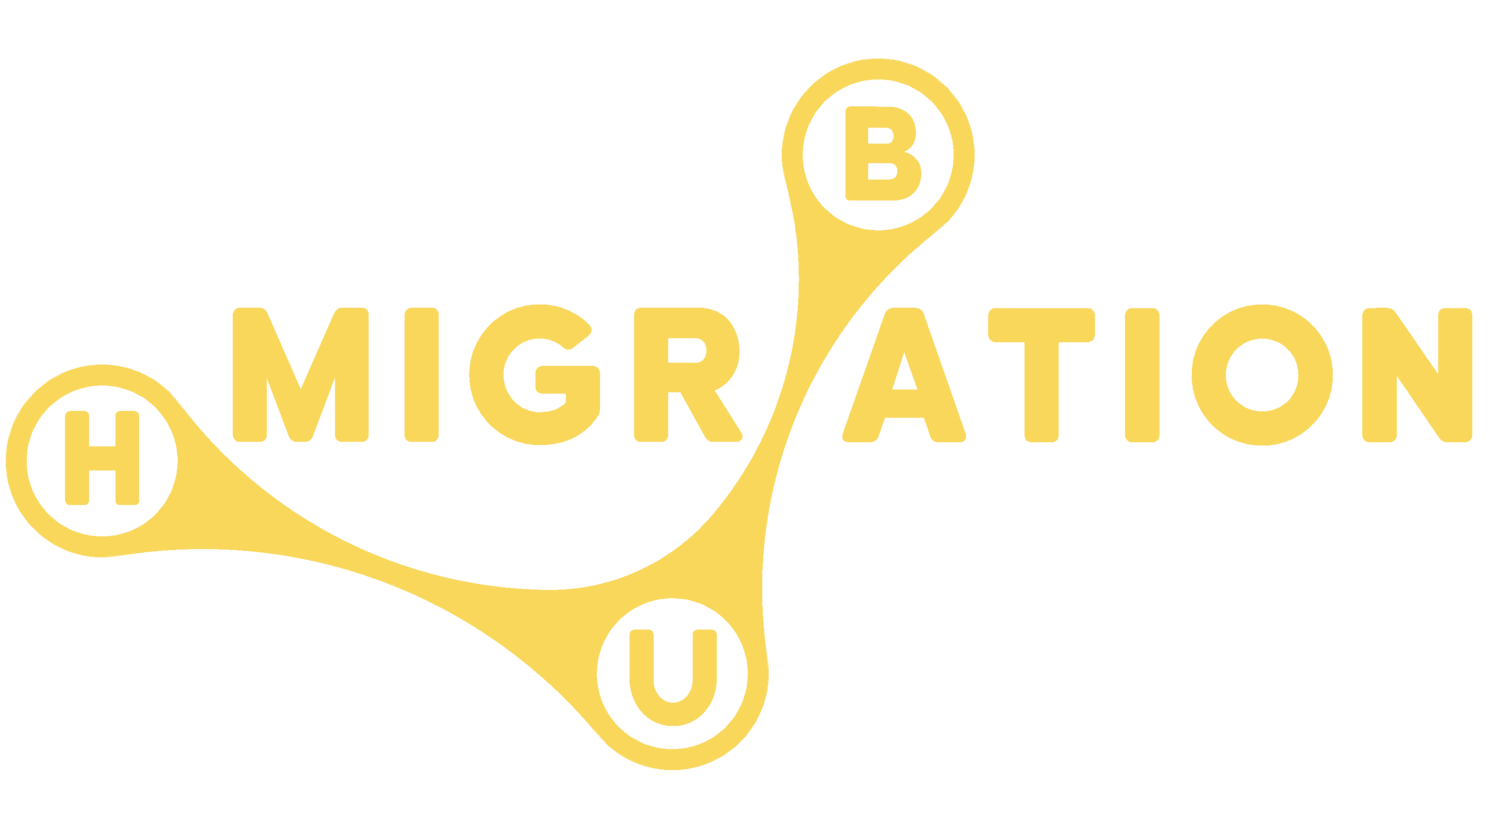 Migration+Hub+YELLOW+logo (1).png